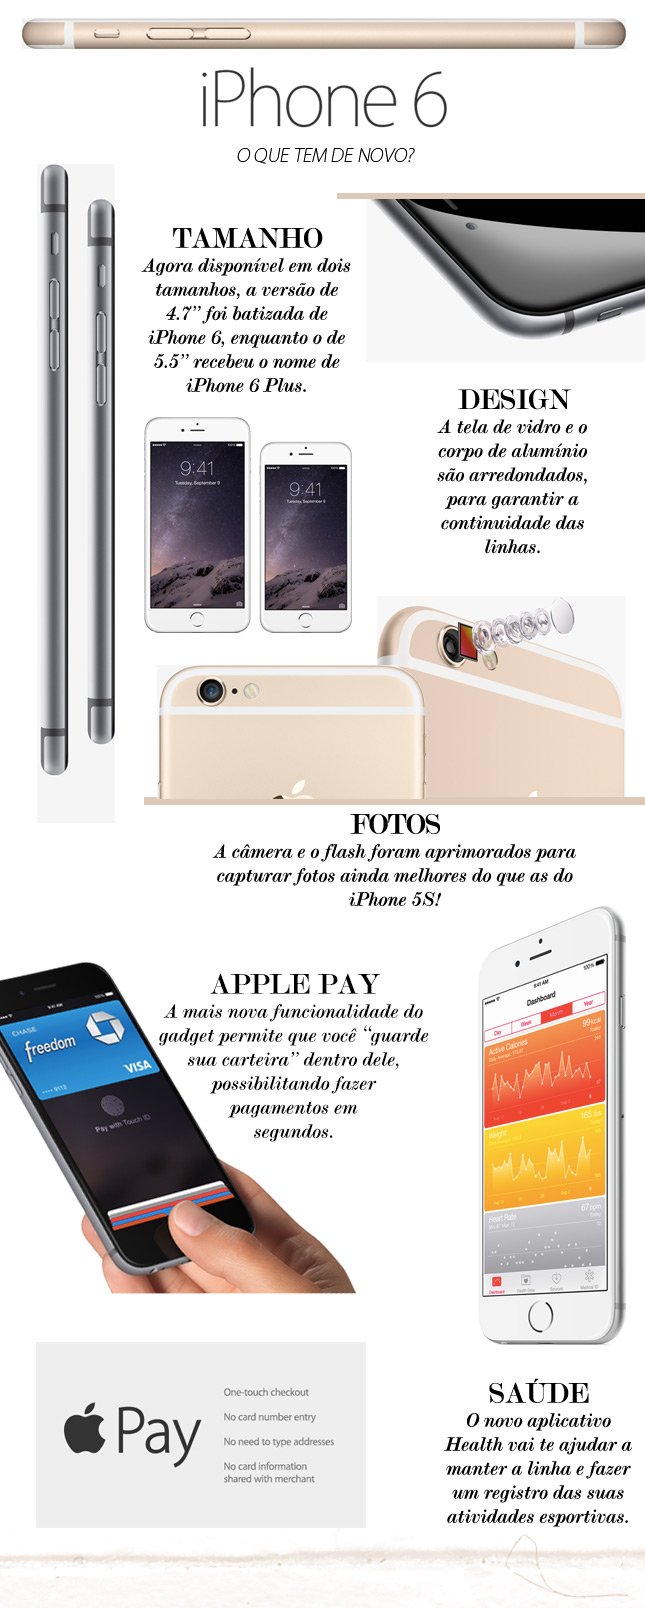 apple launch iphone 6 iphone 6 plus blog de moda oh my closet monica araujo cobertura evento apple watch cores precos